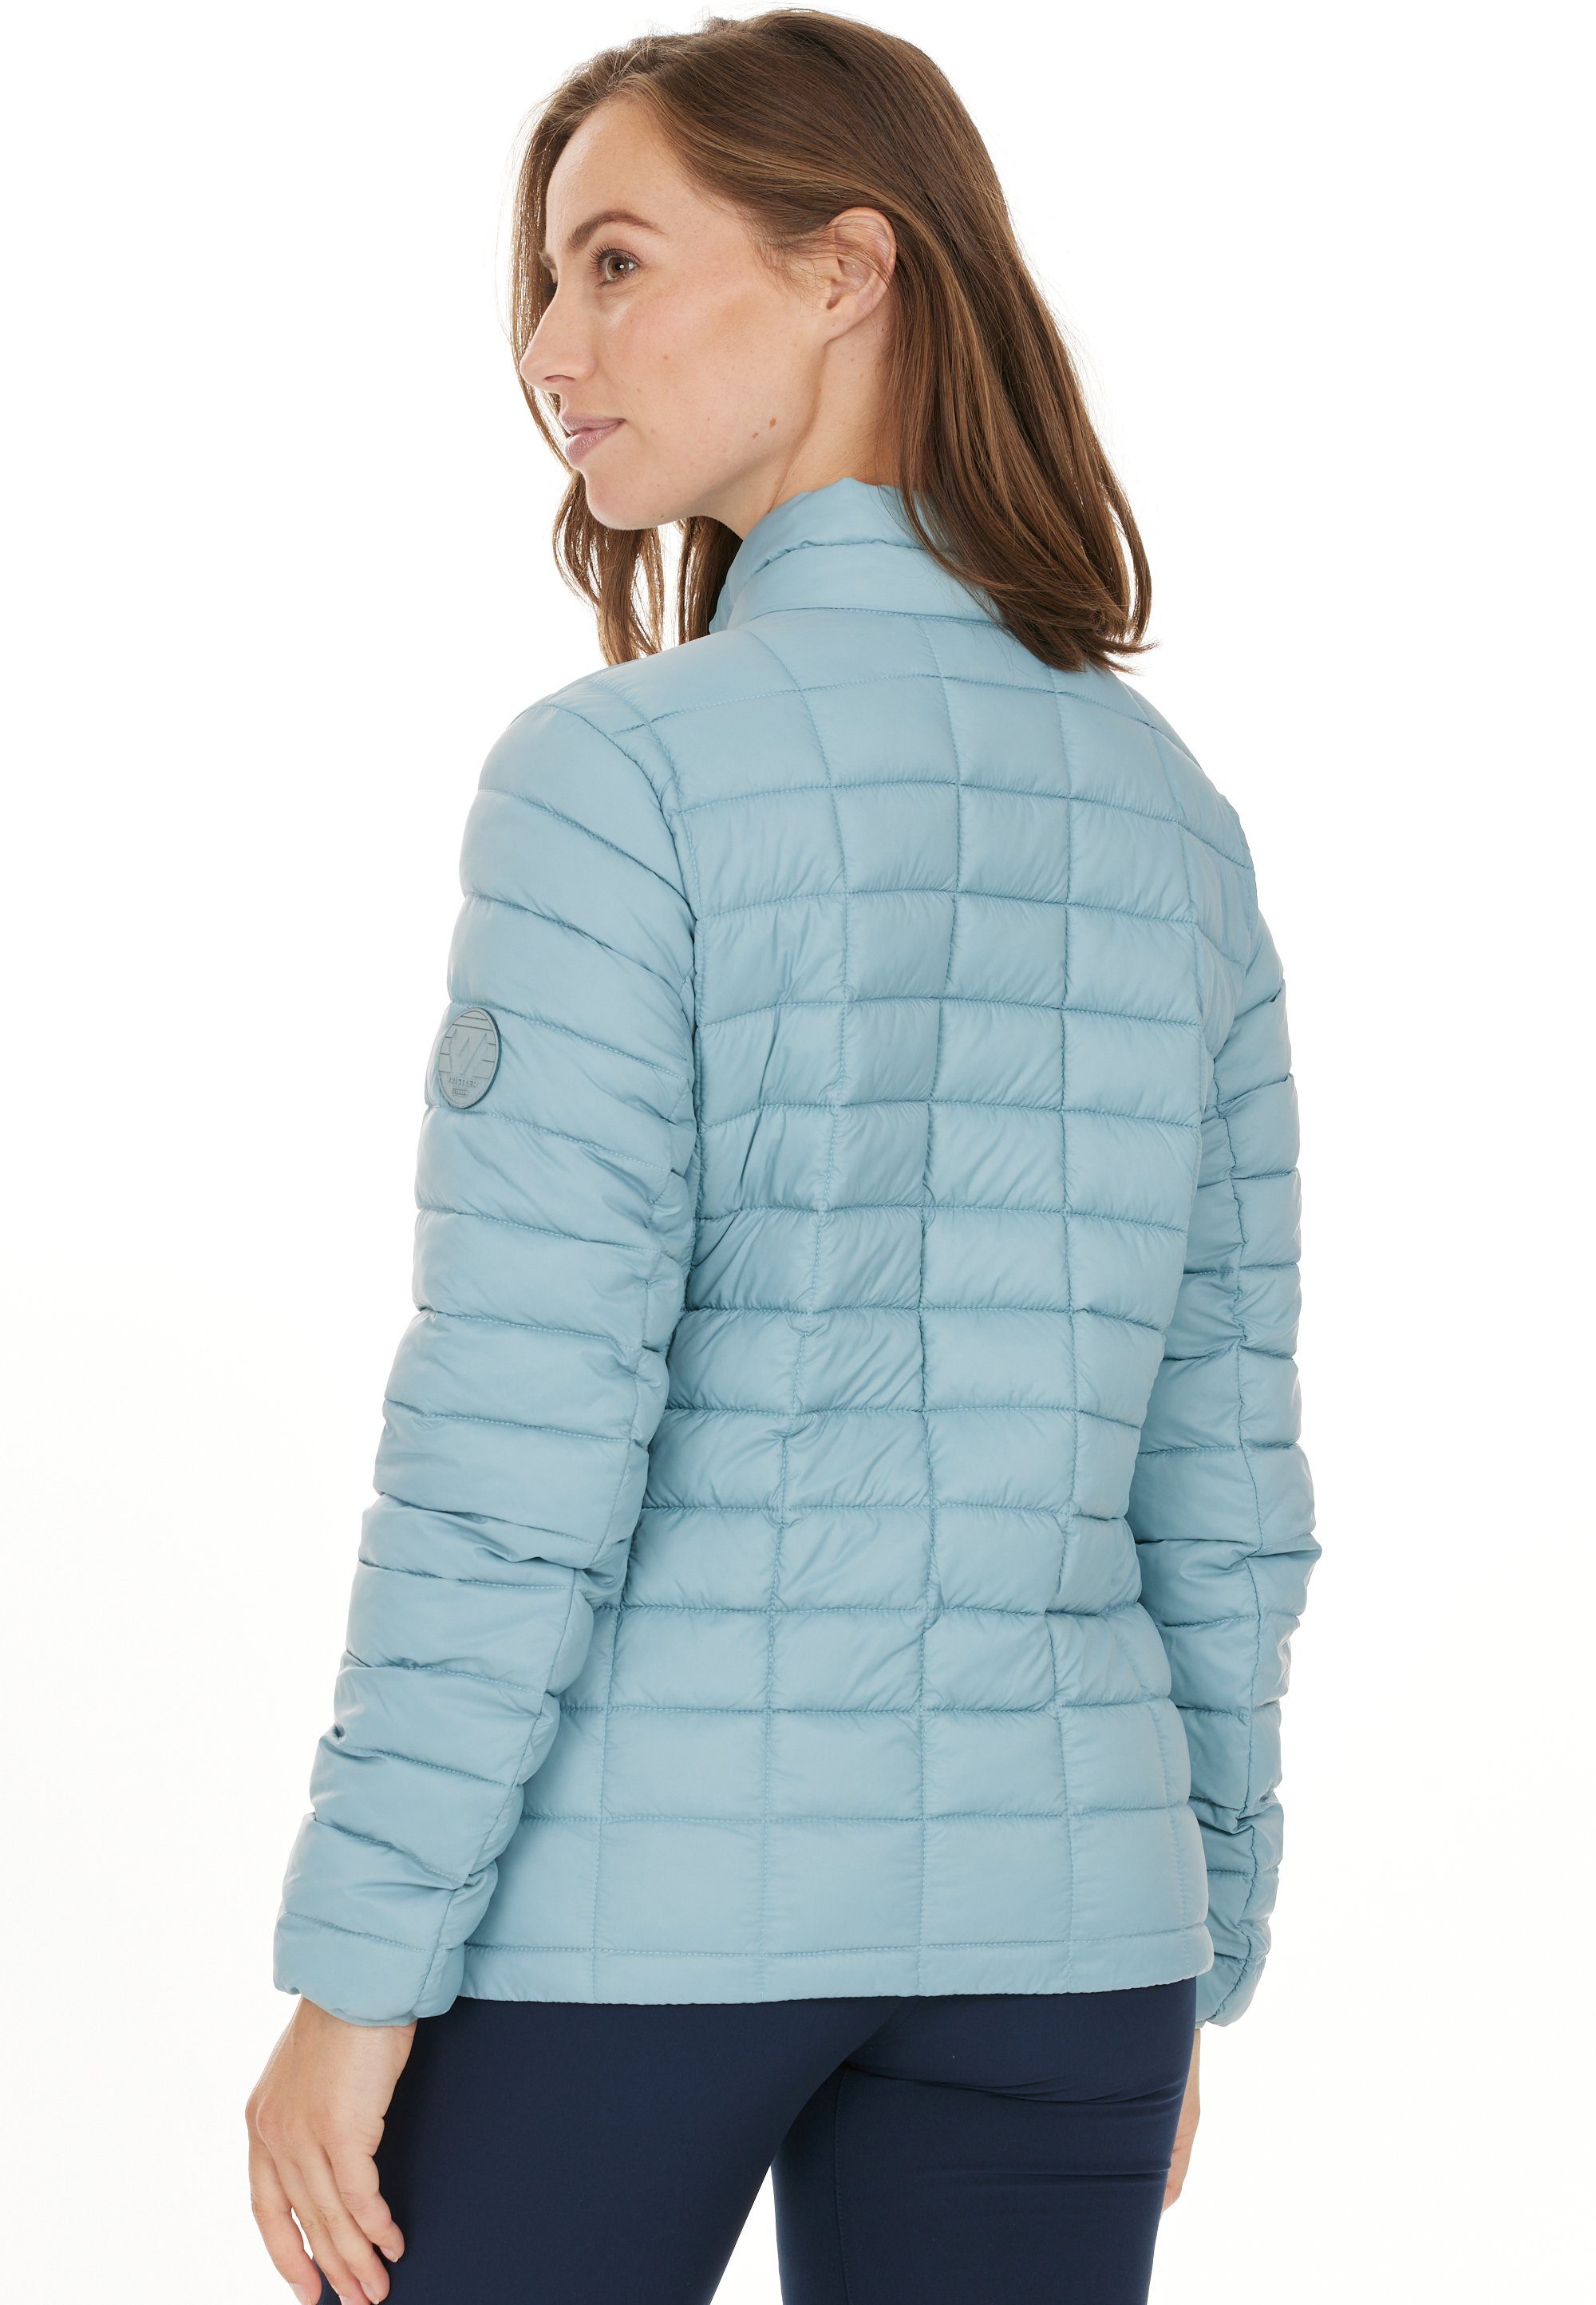 WHISTLER Outdoorjacke Kate in tollem Stepp-Design frostblau